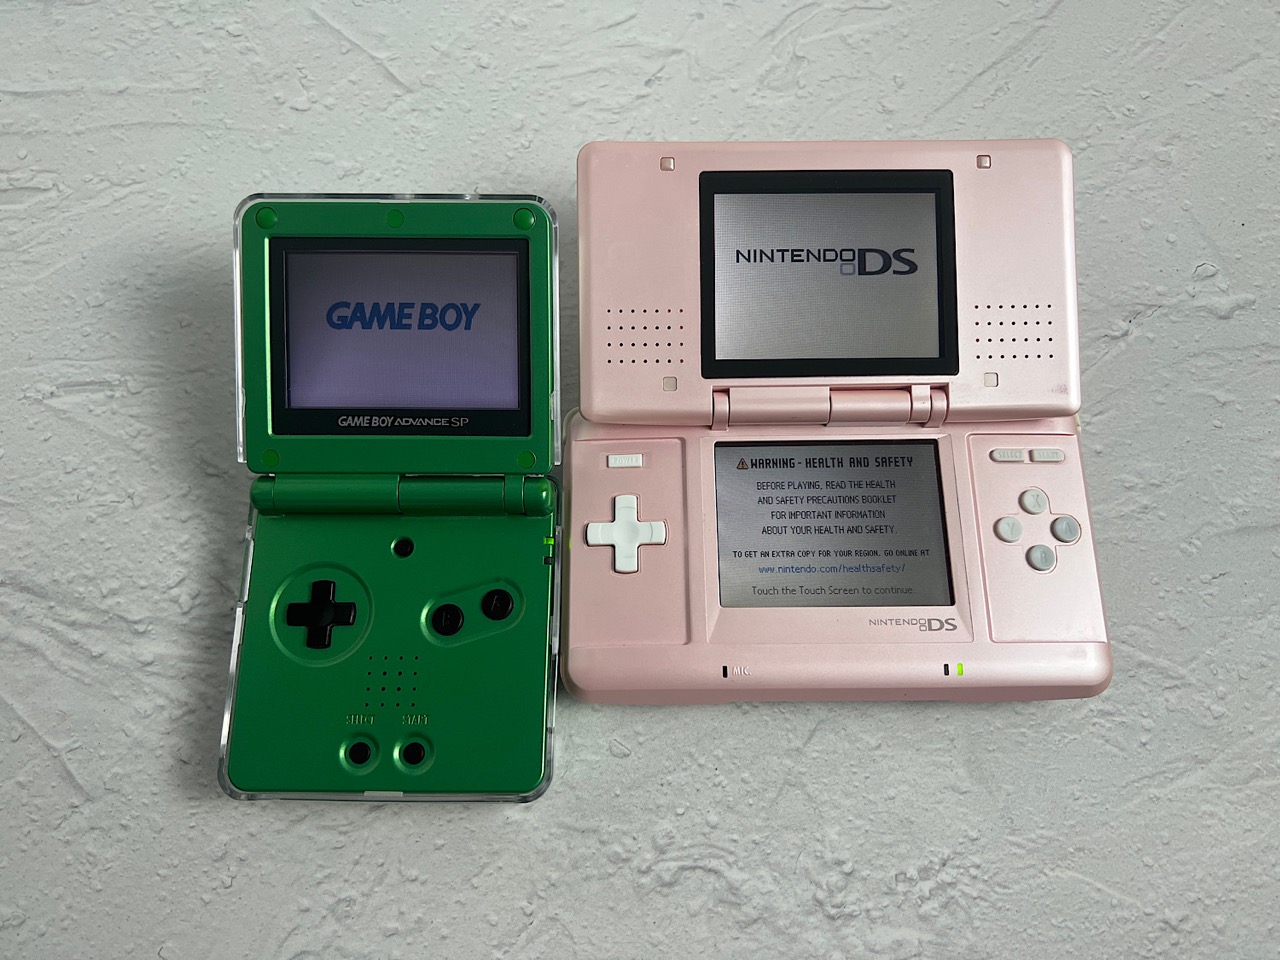 Game Boy Advnace SP AGS-001 и Nintendo DS